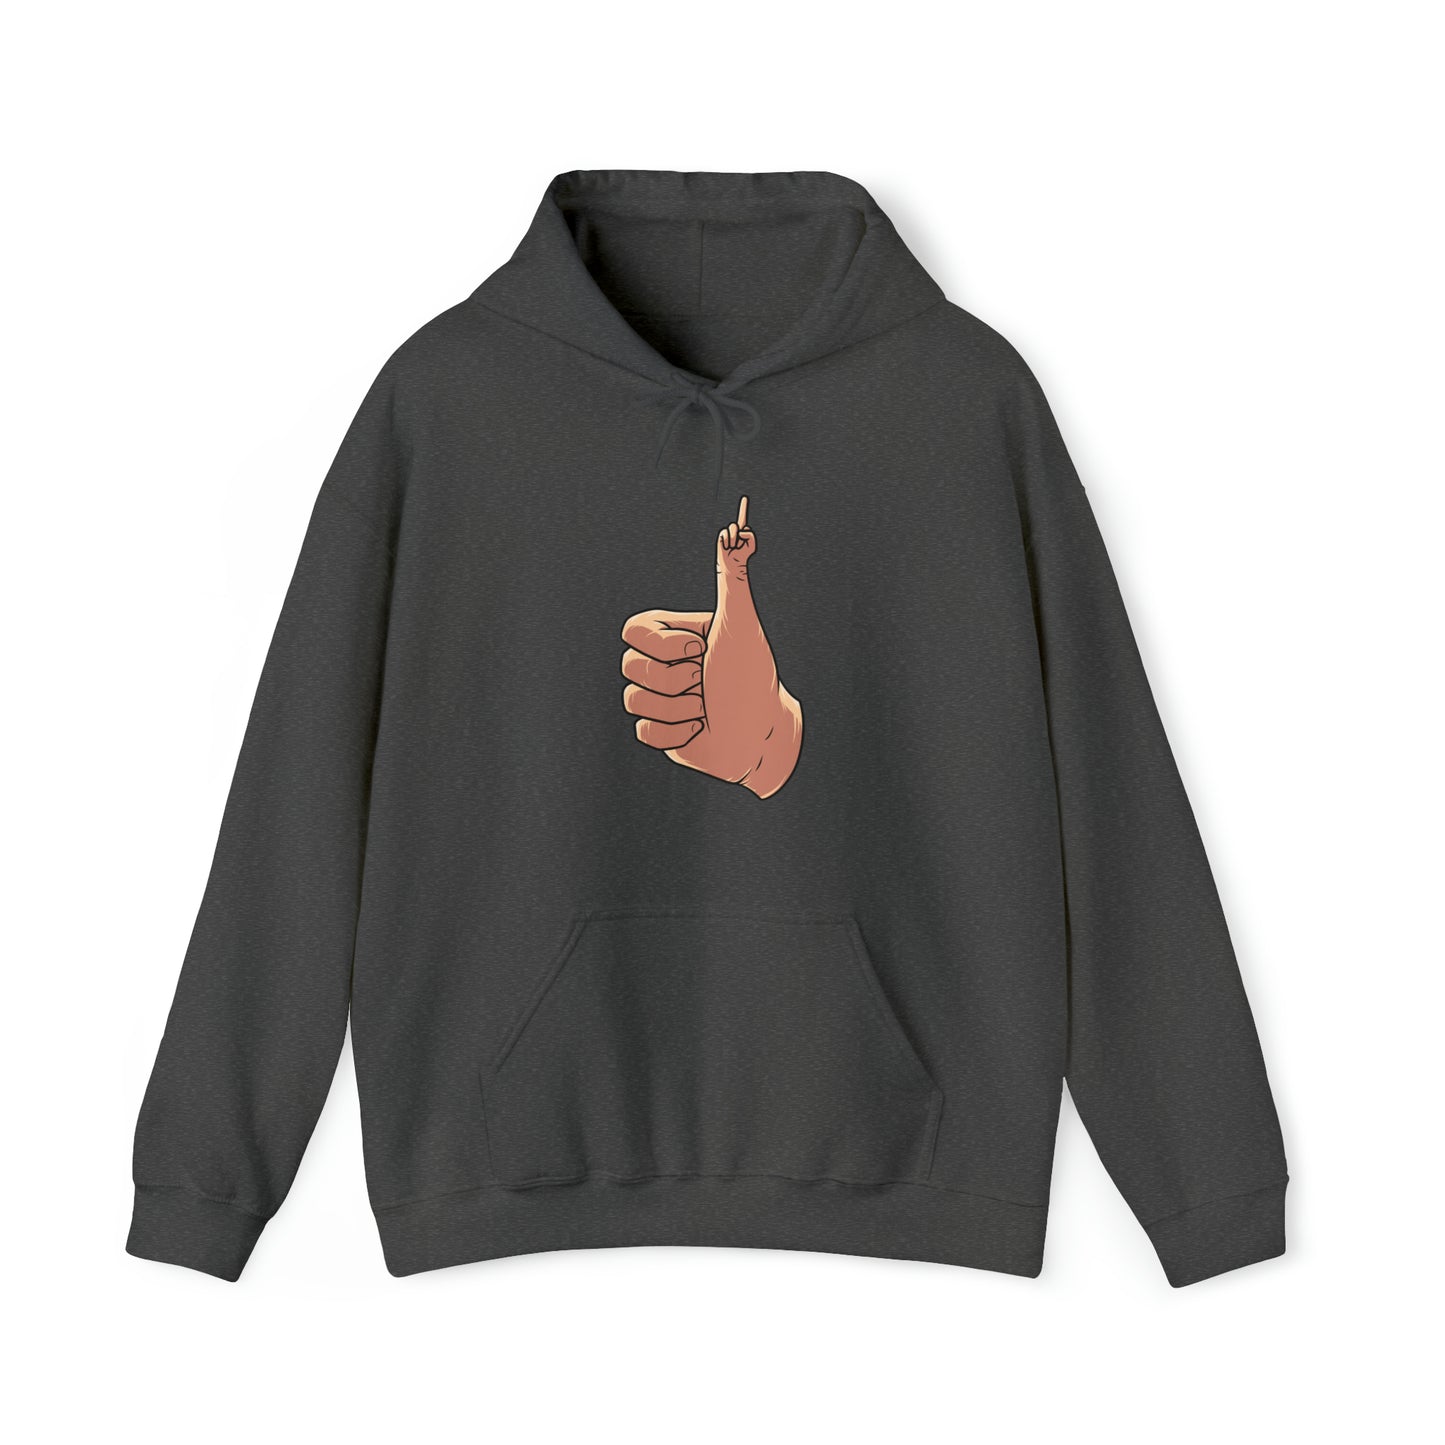 Custom Parody Hooded Sweatshirt, Thumbs up design